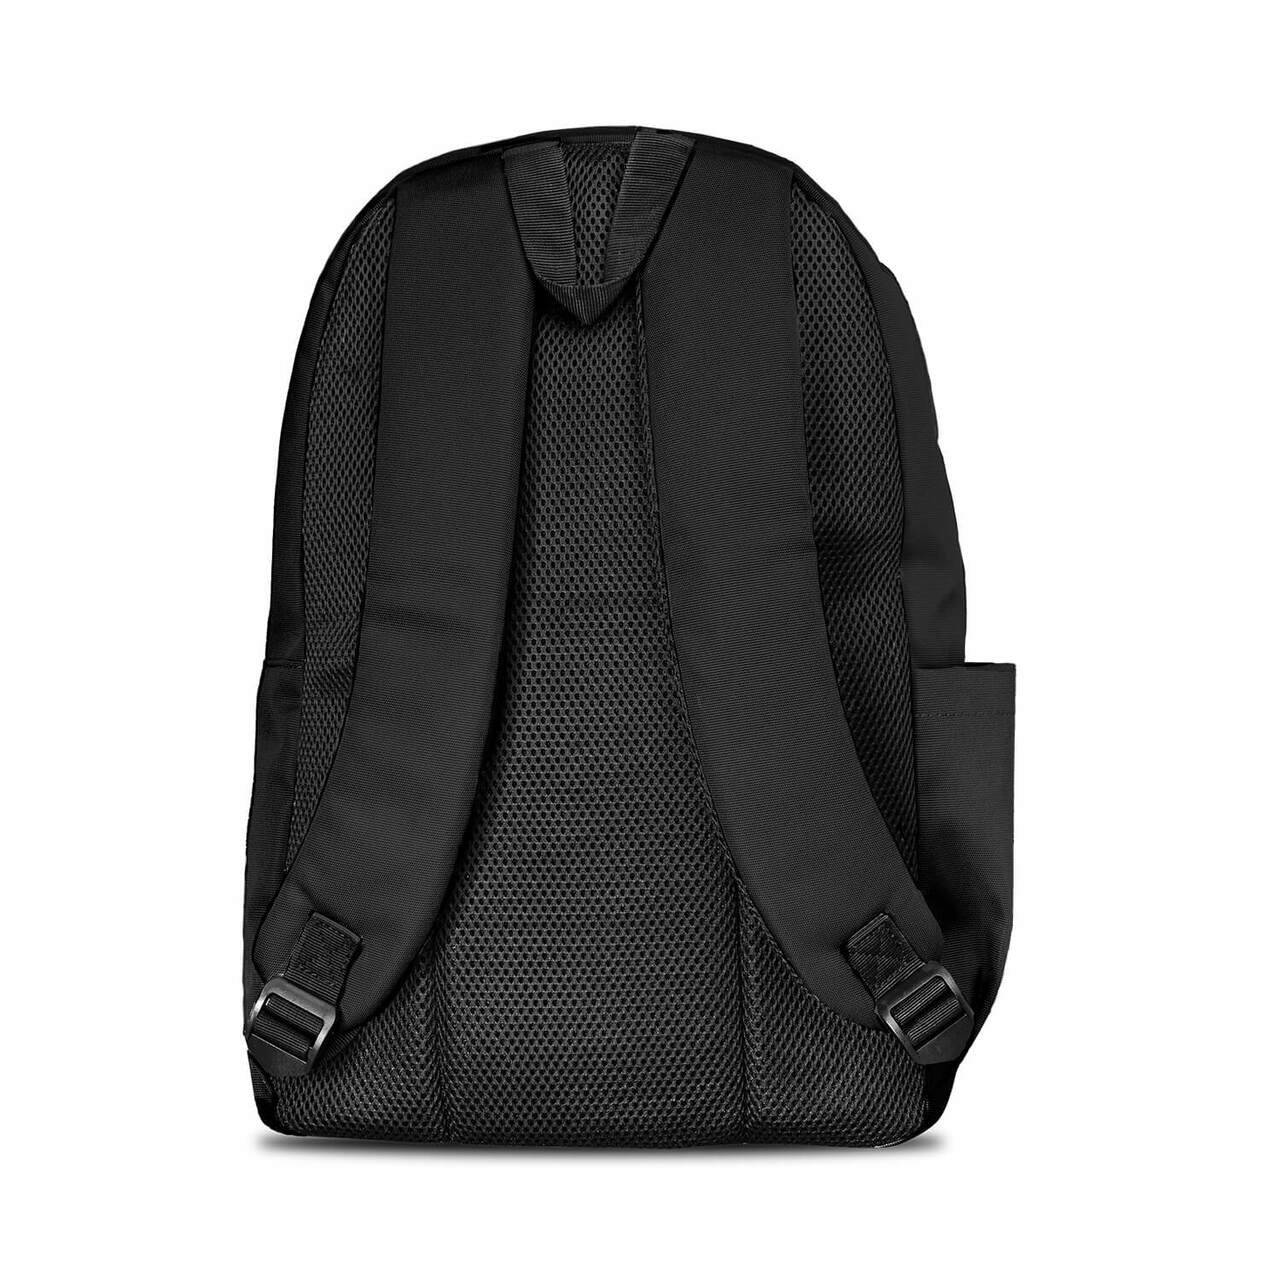 Florida Panthers Campus Laptop Backpack- Black